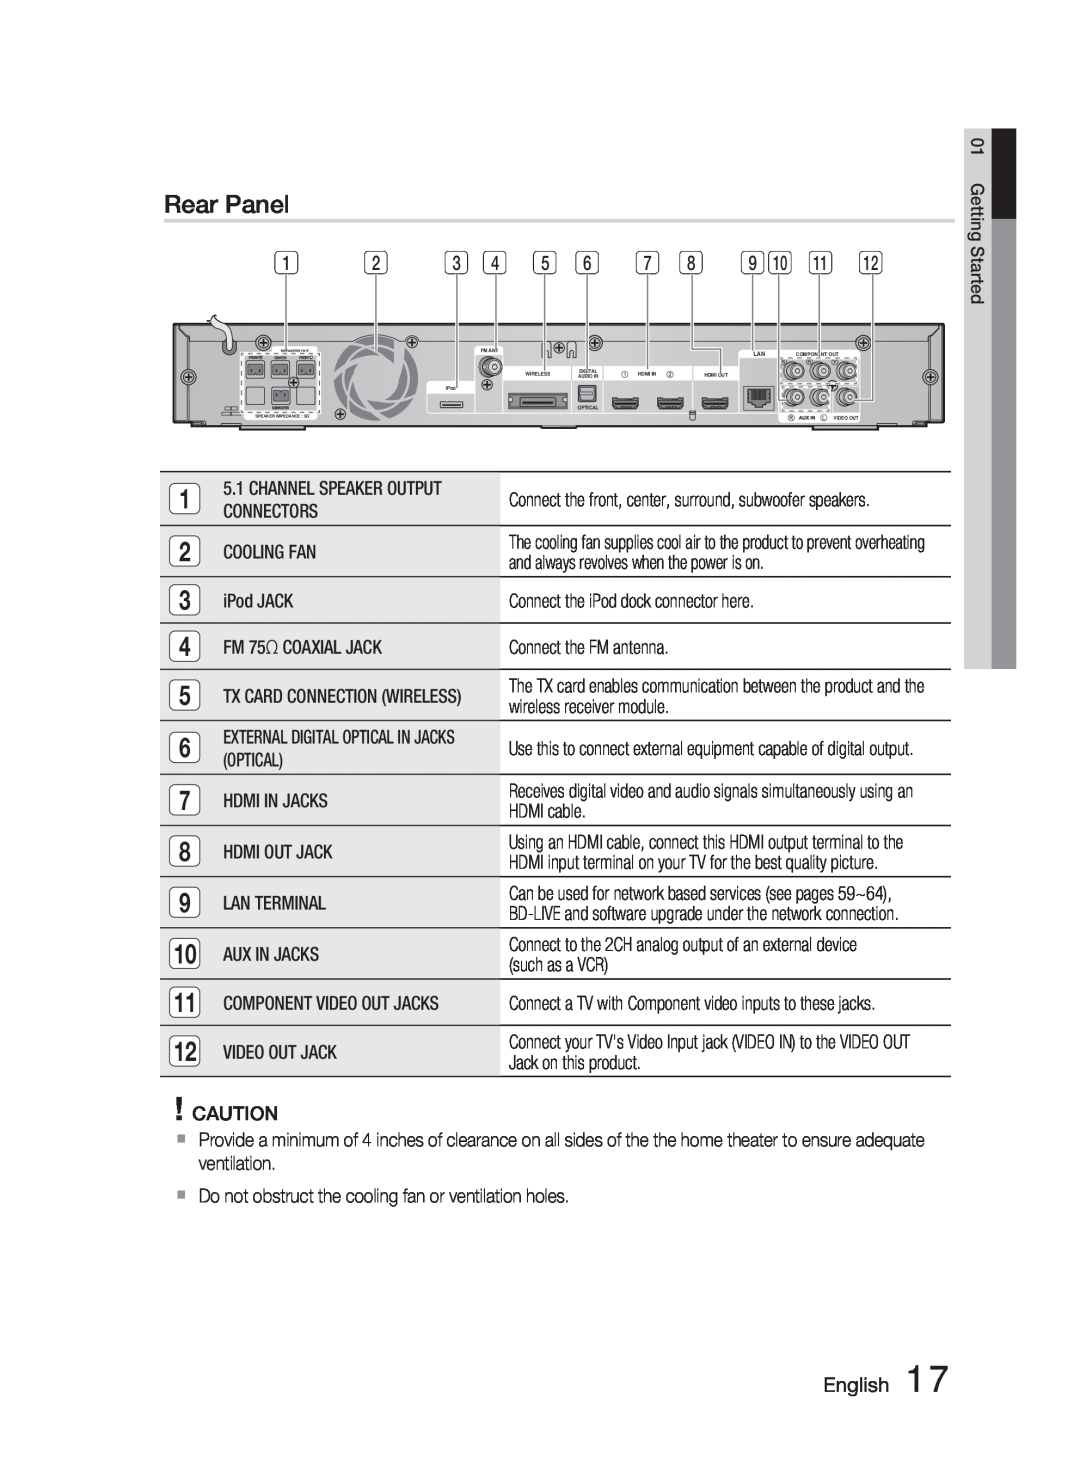 Samsung AH68-02279R user manual Rear Panel, English 